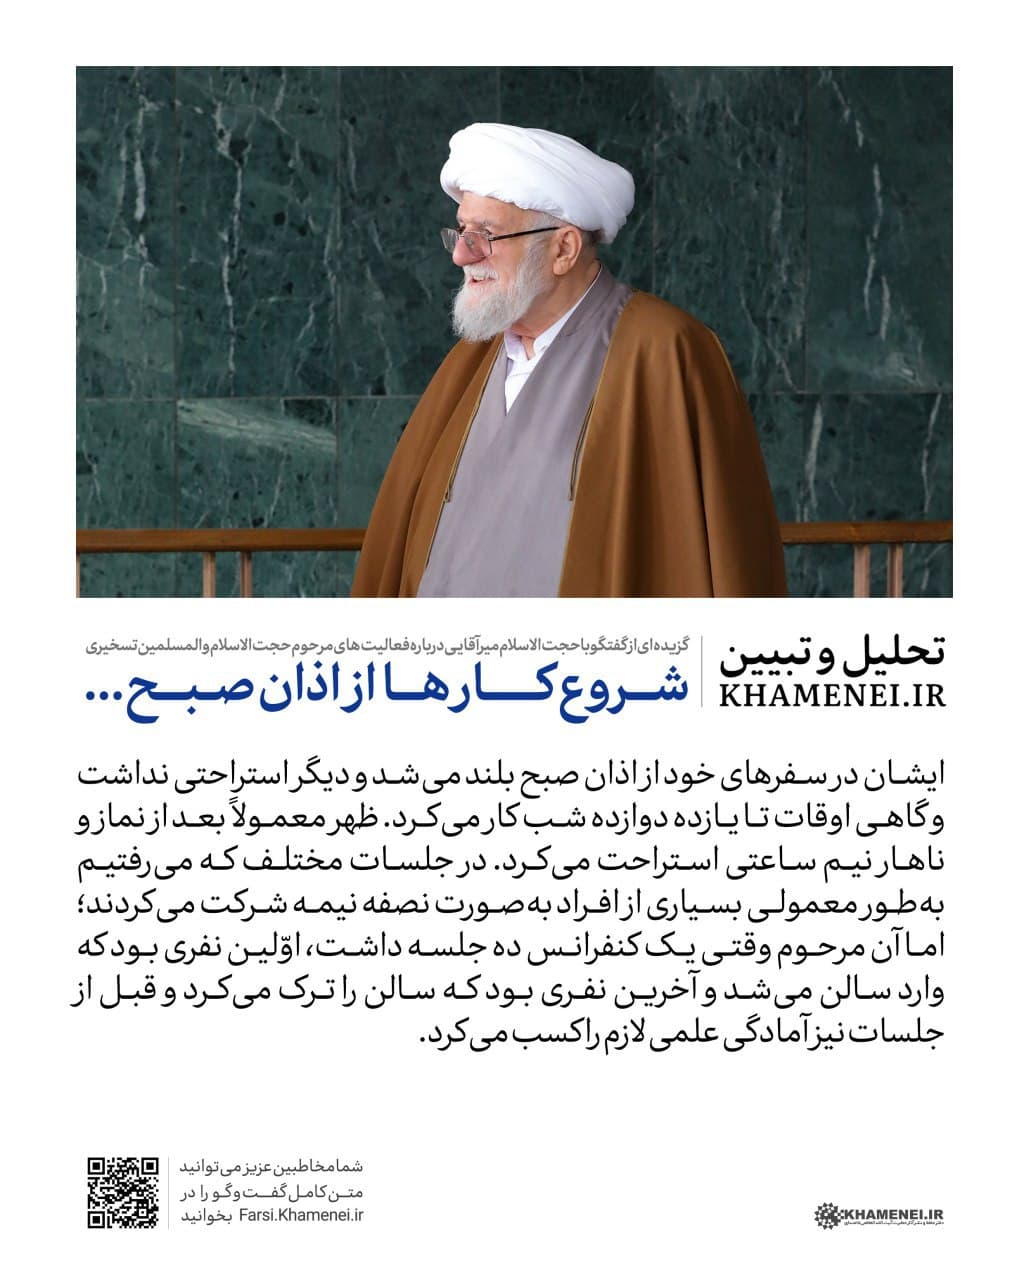 https://idc0-cdn0.khamenei.ir/ndata/news/46582/photo_2020-10-03_16-26-51.jpg